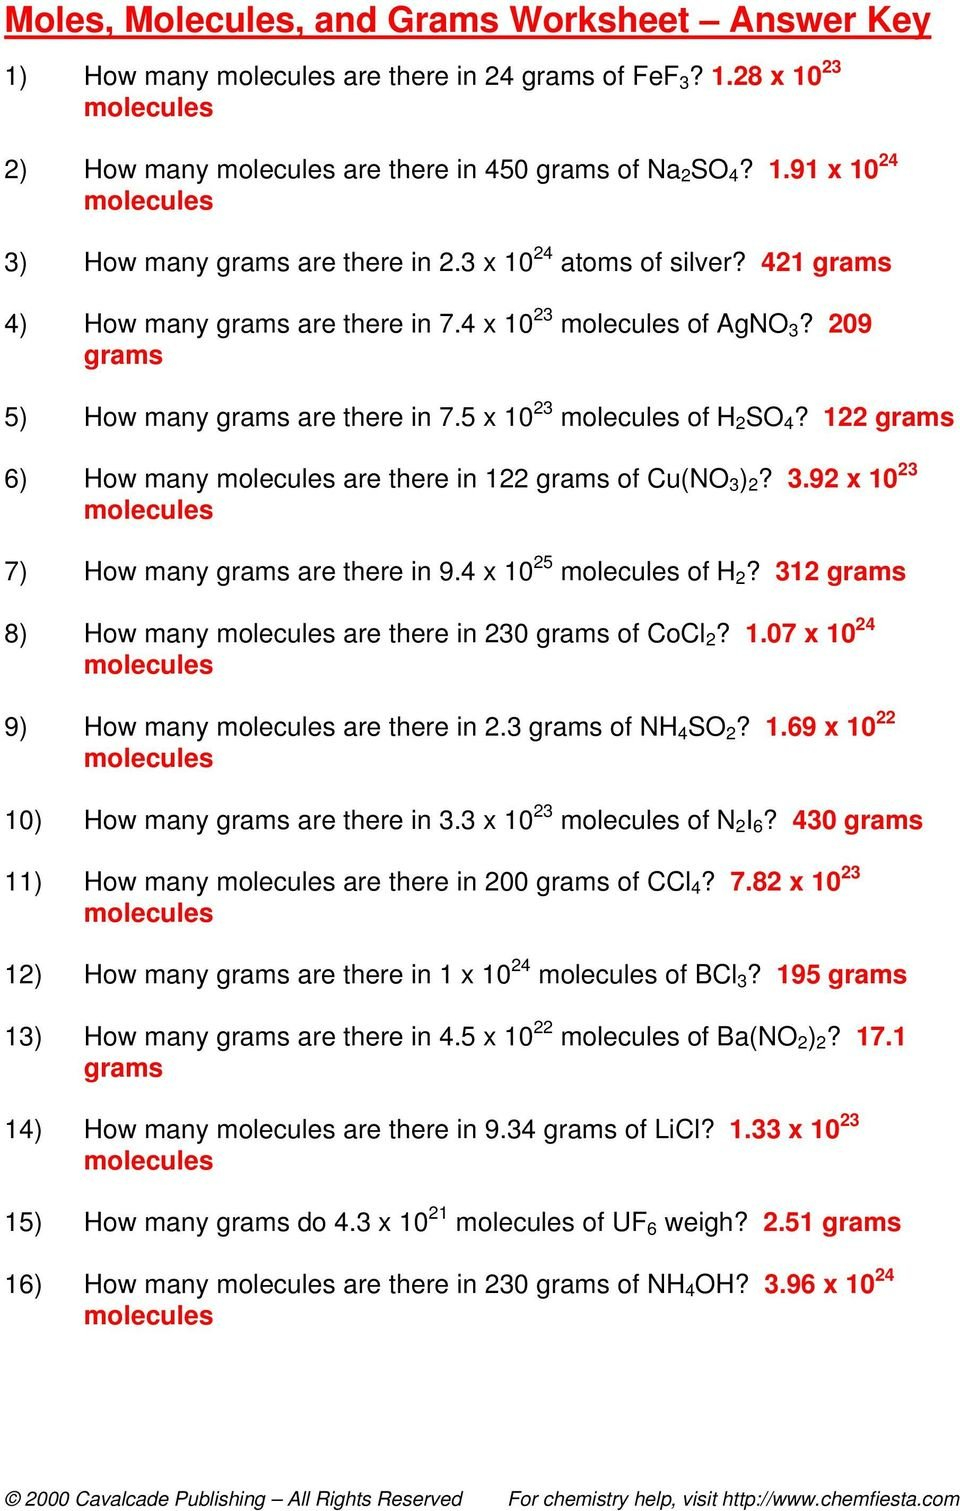 Moles Molecules And Grams Worksheet  Newatvs Along With Moles Molecules And Grams Worksheet Answers